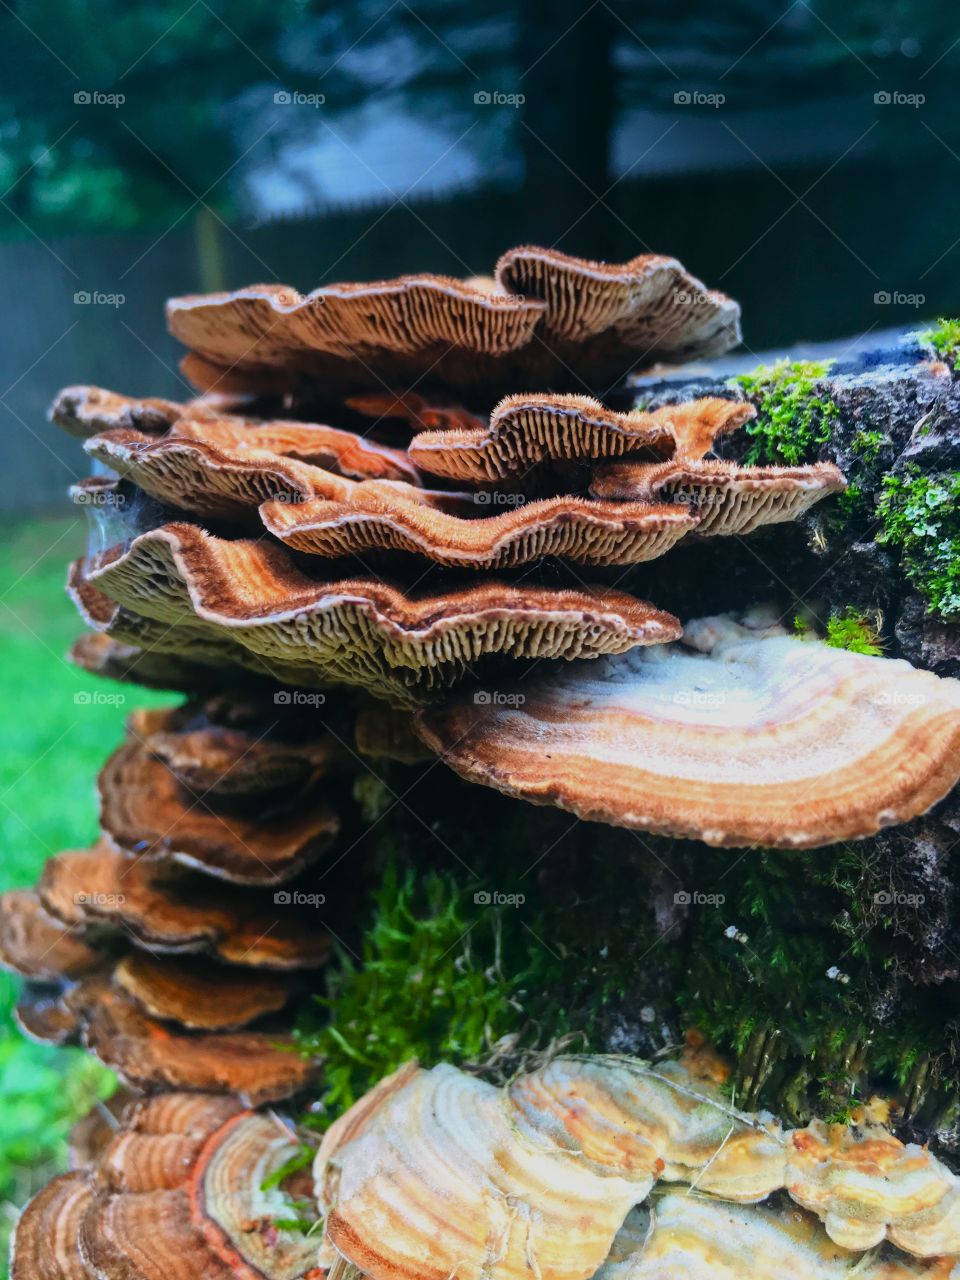 Ew a Mushroom growing off my tree trunk